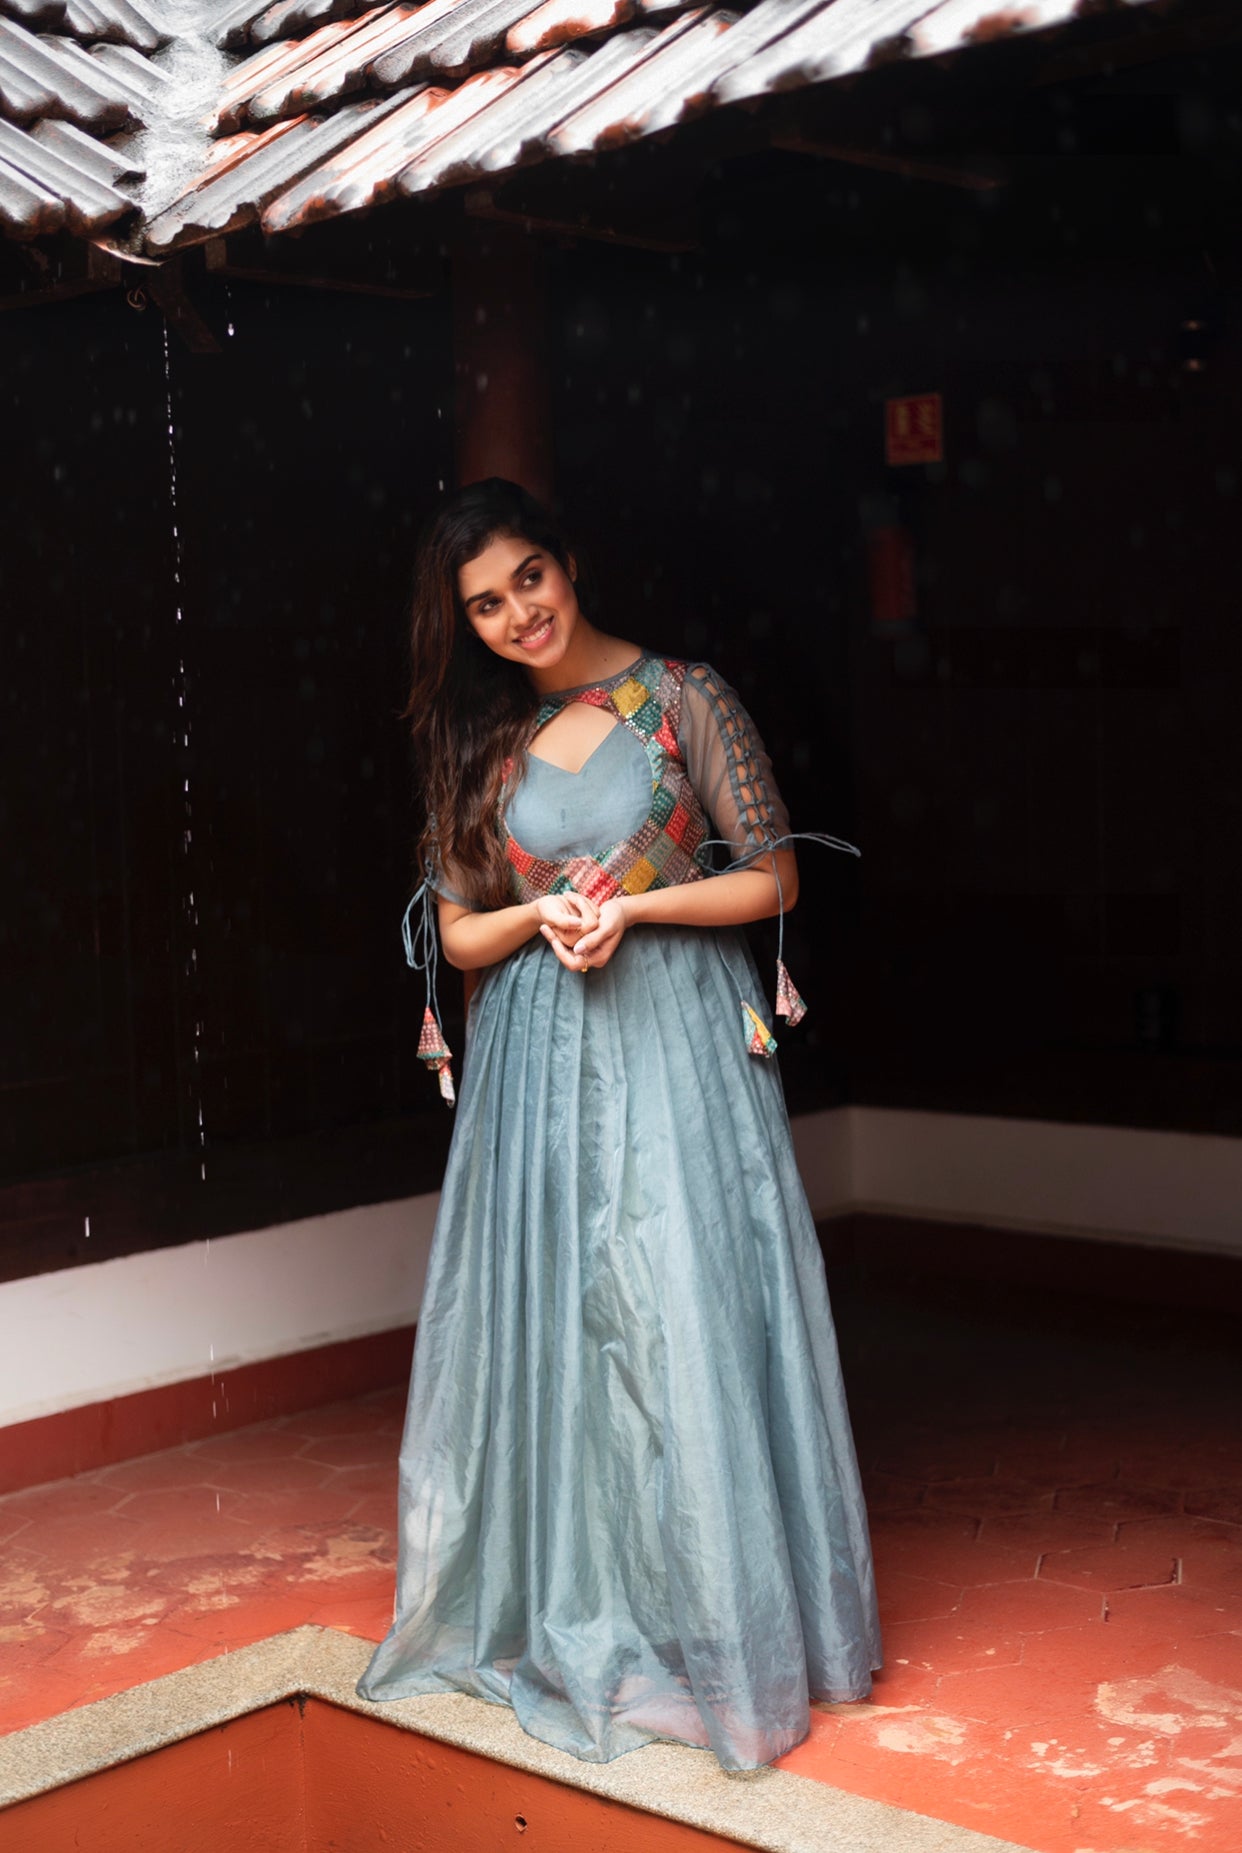 Indian Wedding Party Wear Dress Designer Bollywood Salwar Anarkali New Long  Gown | eBay